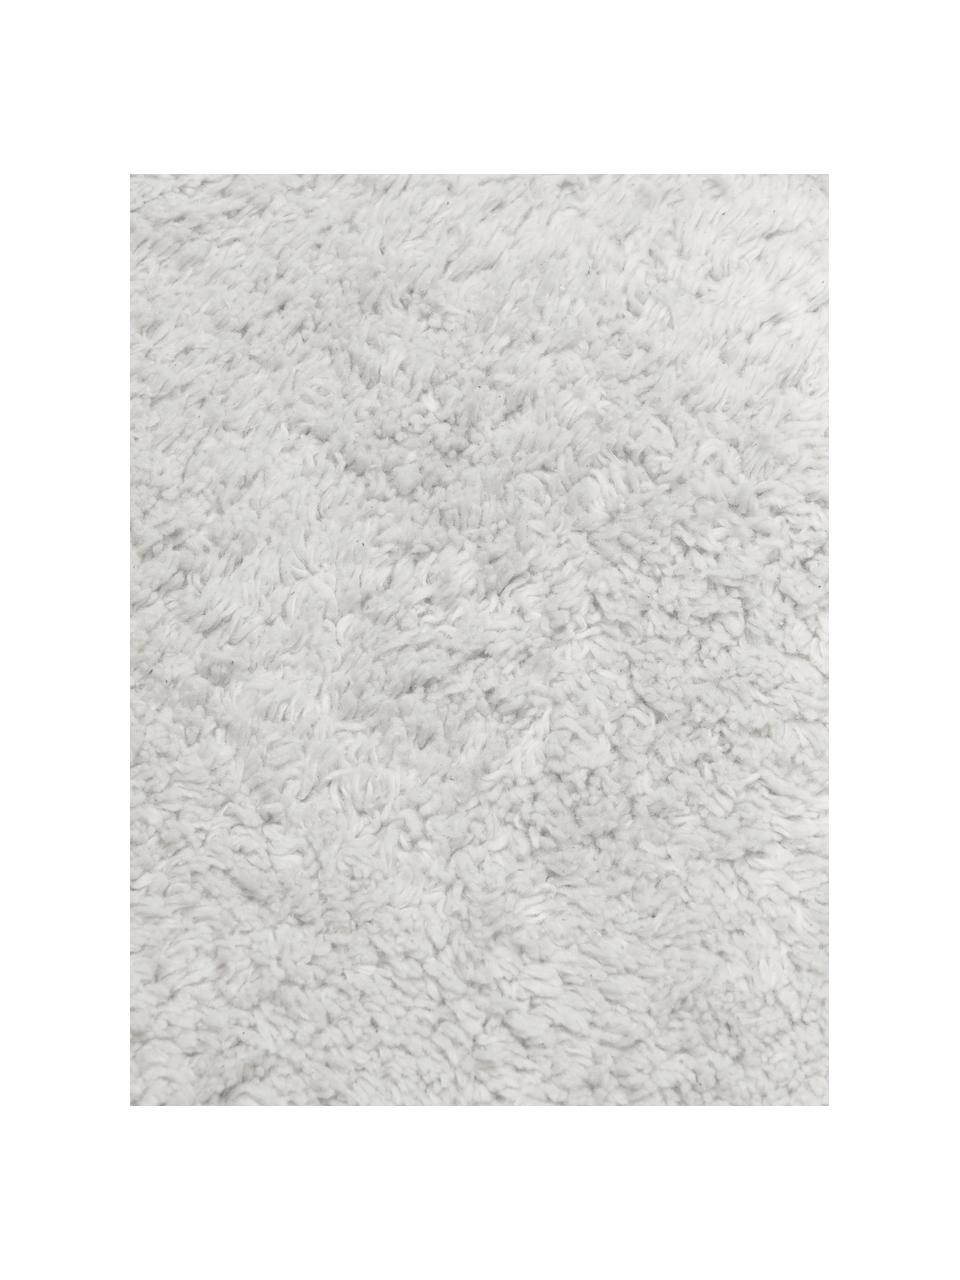 Alfombra redonda artesanal de algodón Plain, Gris, blanco, Ø 110 cm (Tamaño S)